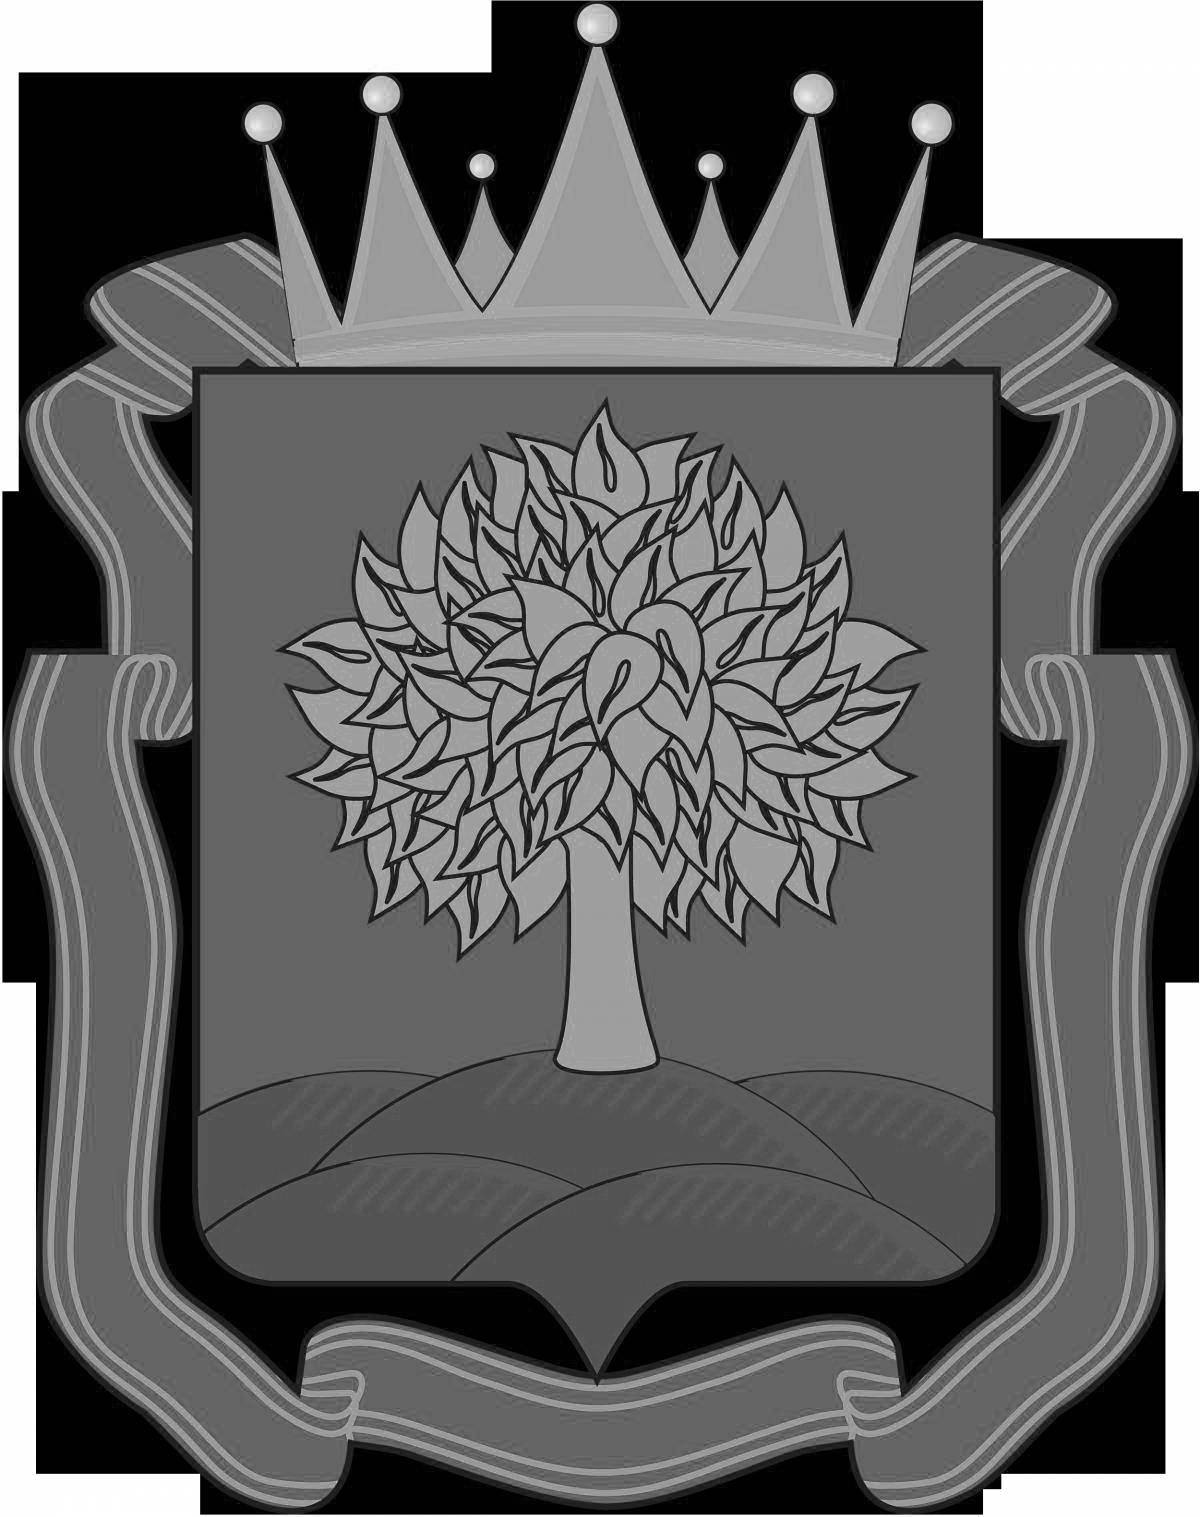 Dazzling coat of arms of Lipetsk